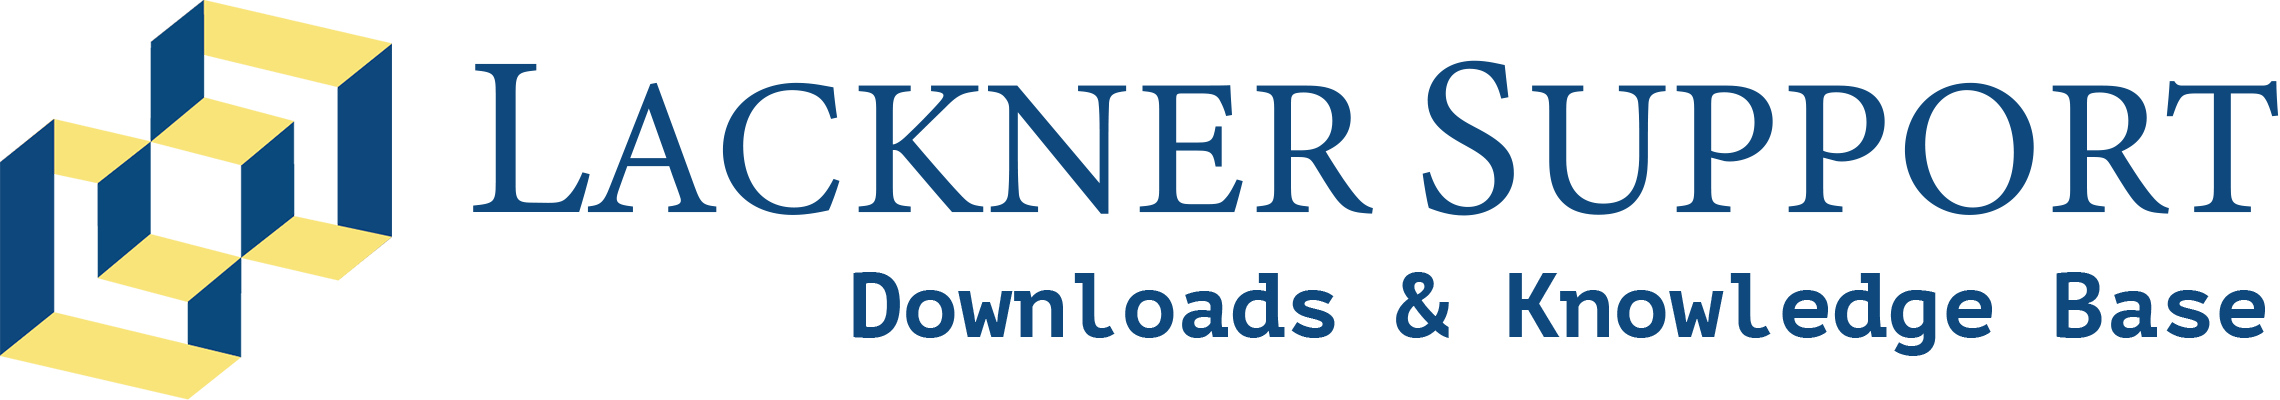 Lackner Group Support, Downloads & Knowledge Base